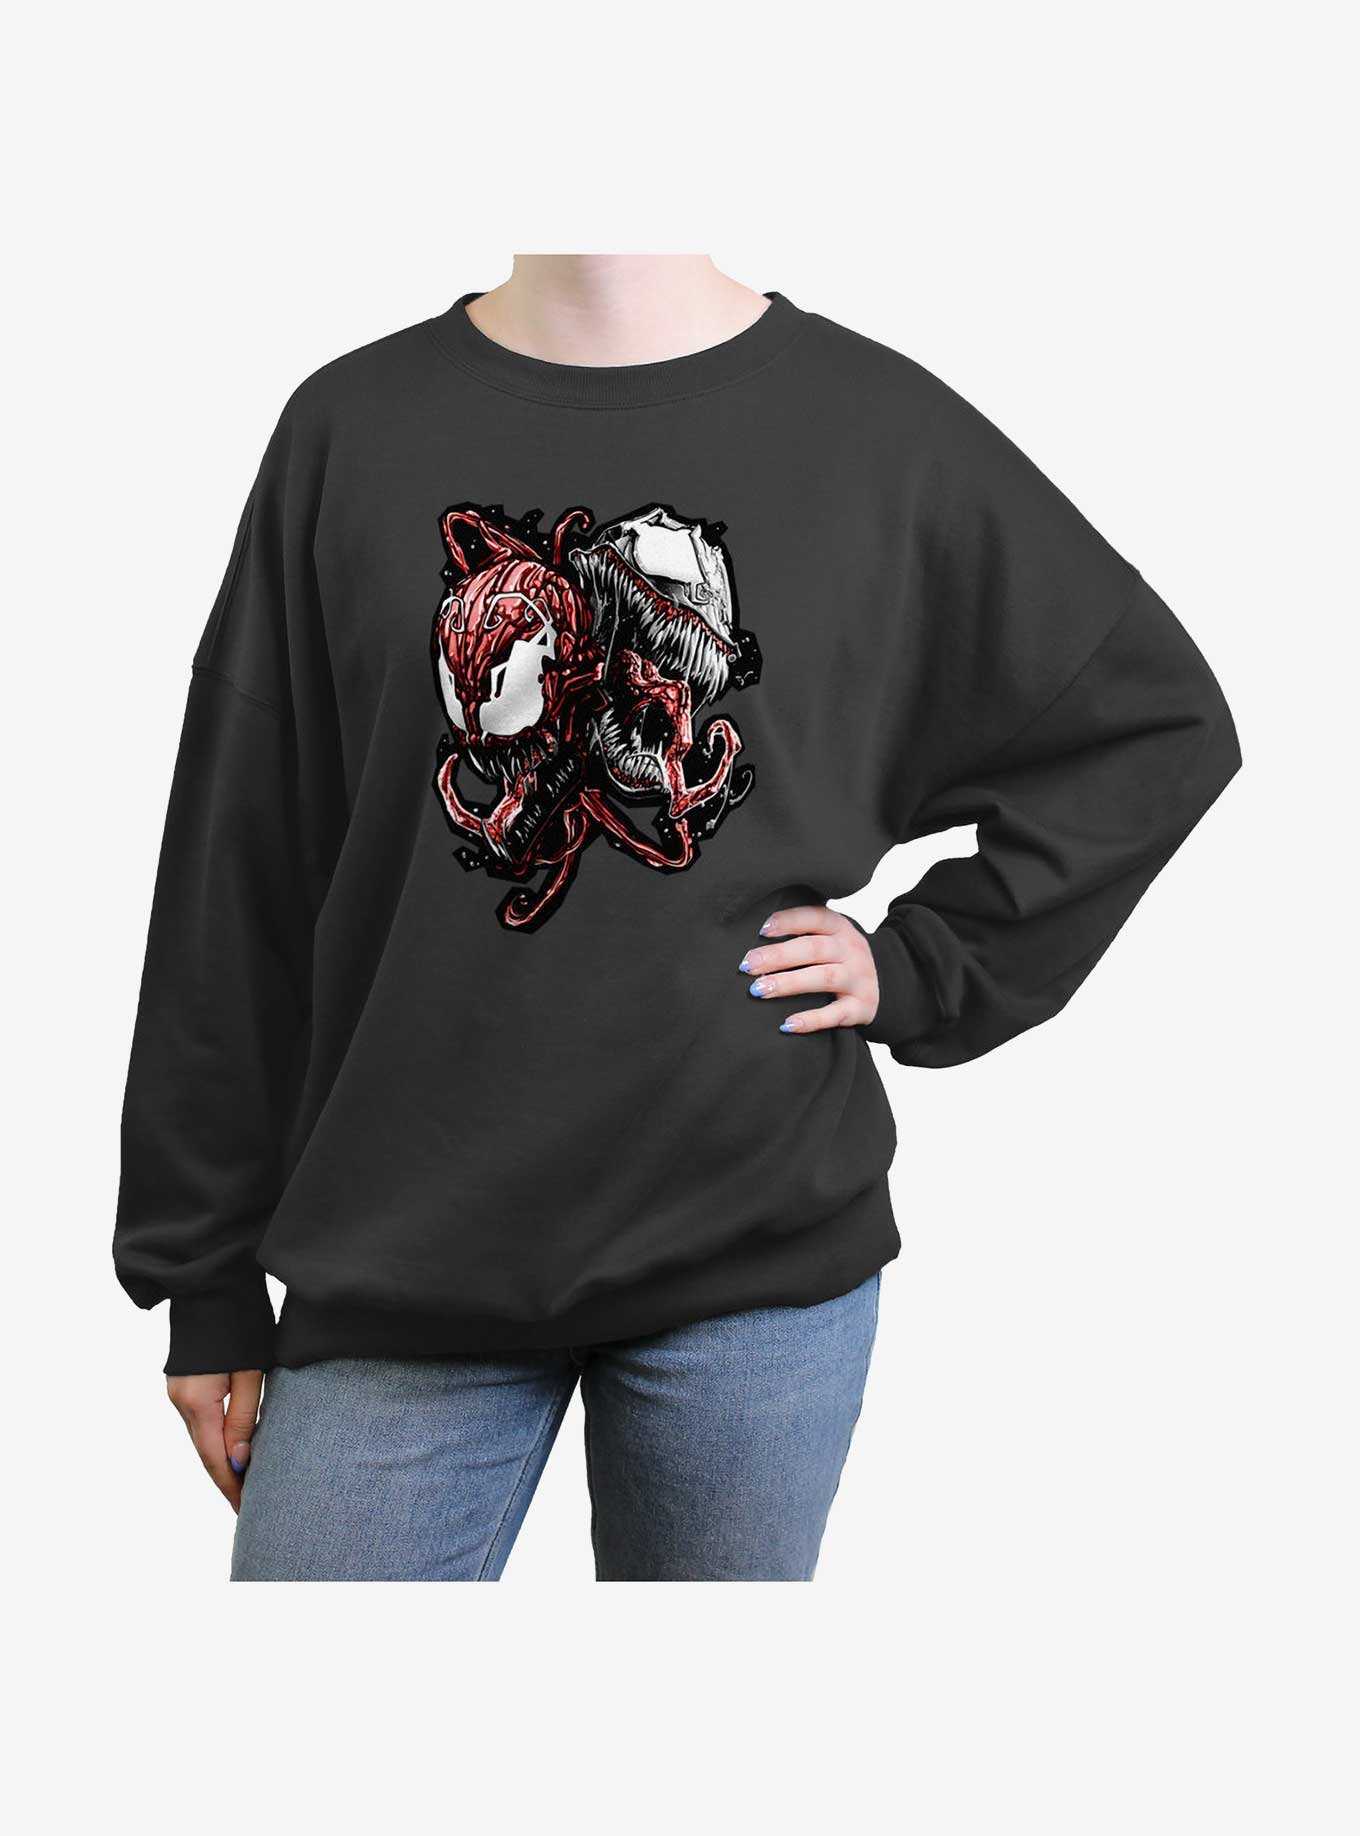 Marvel Venom Poison Girls Oversized Sweatshirt, , hi-res